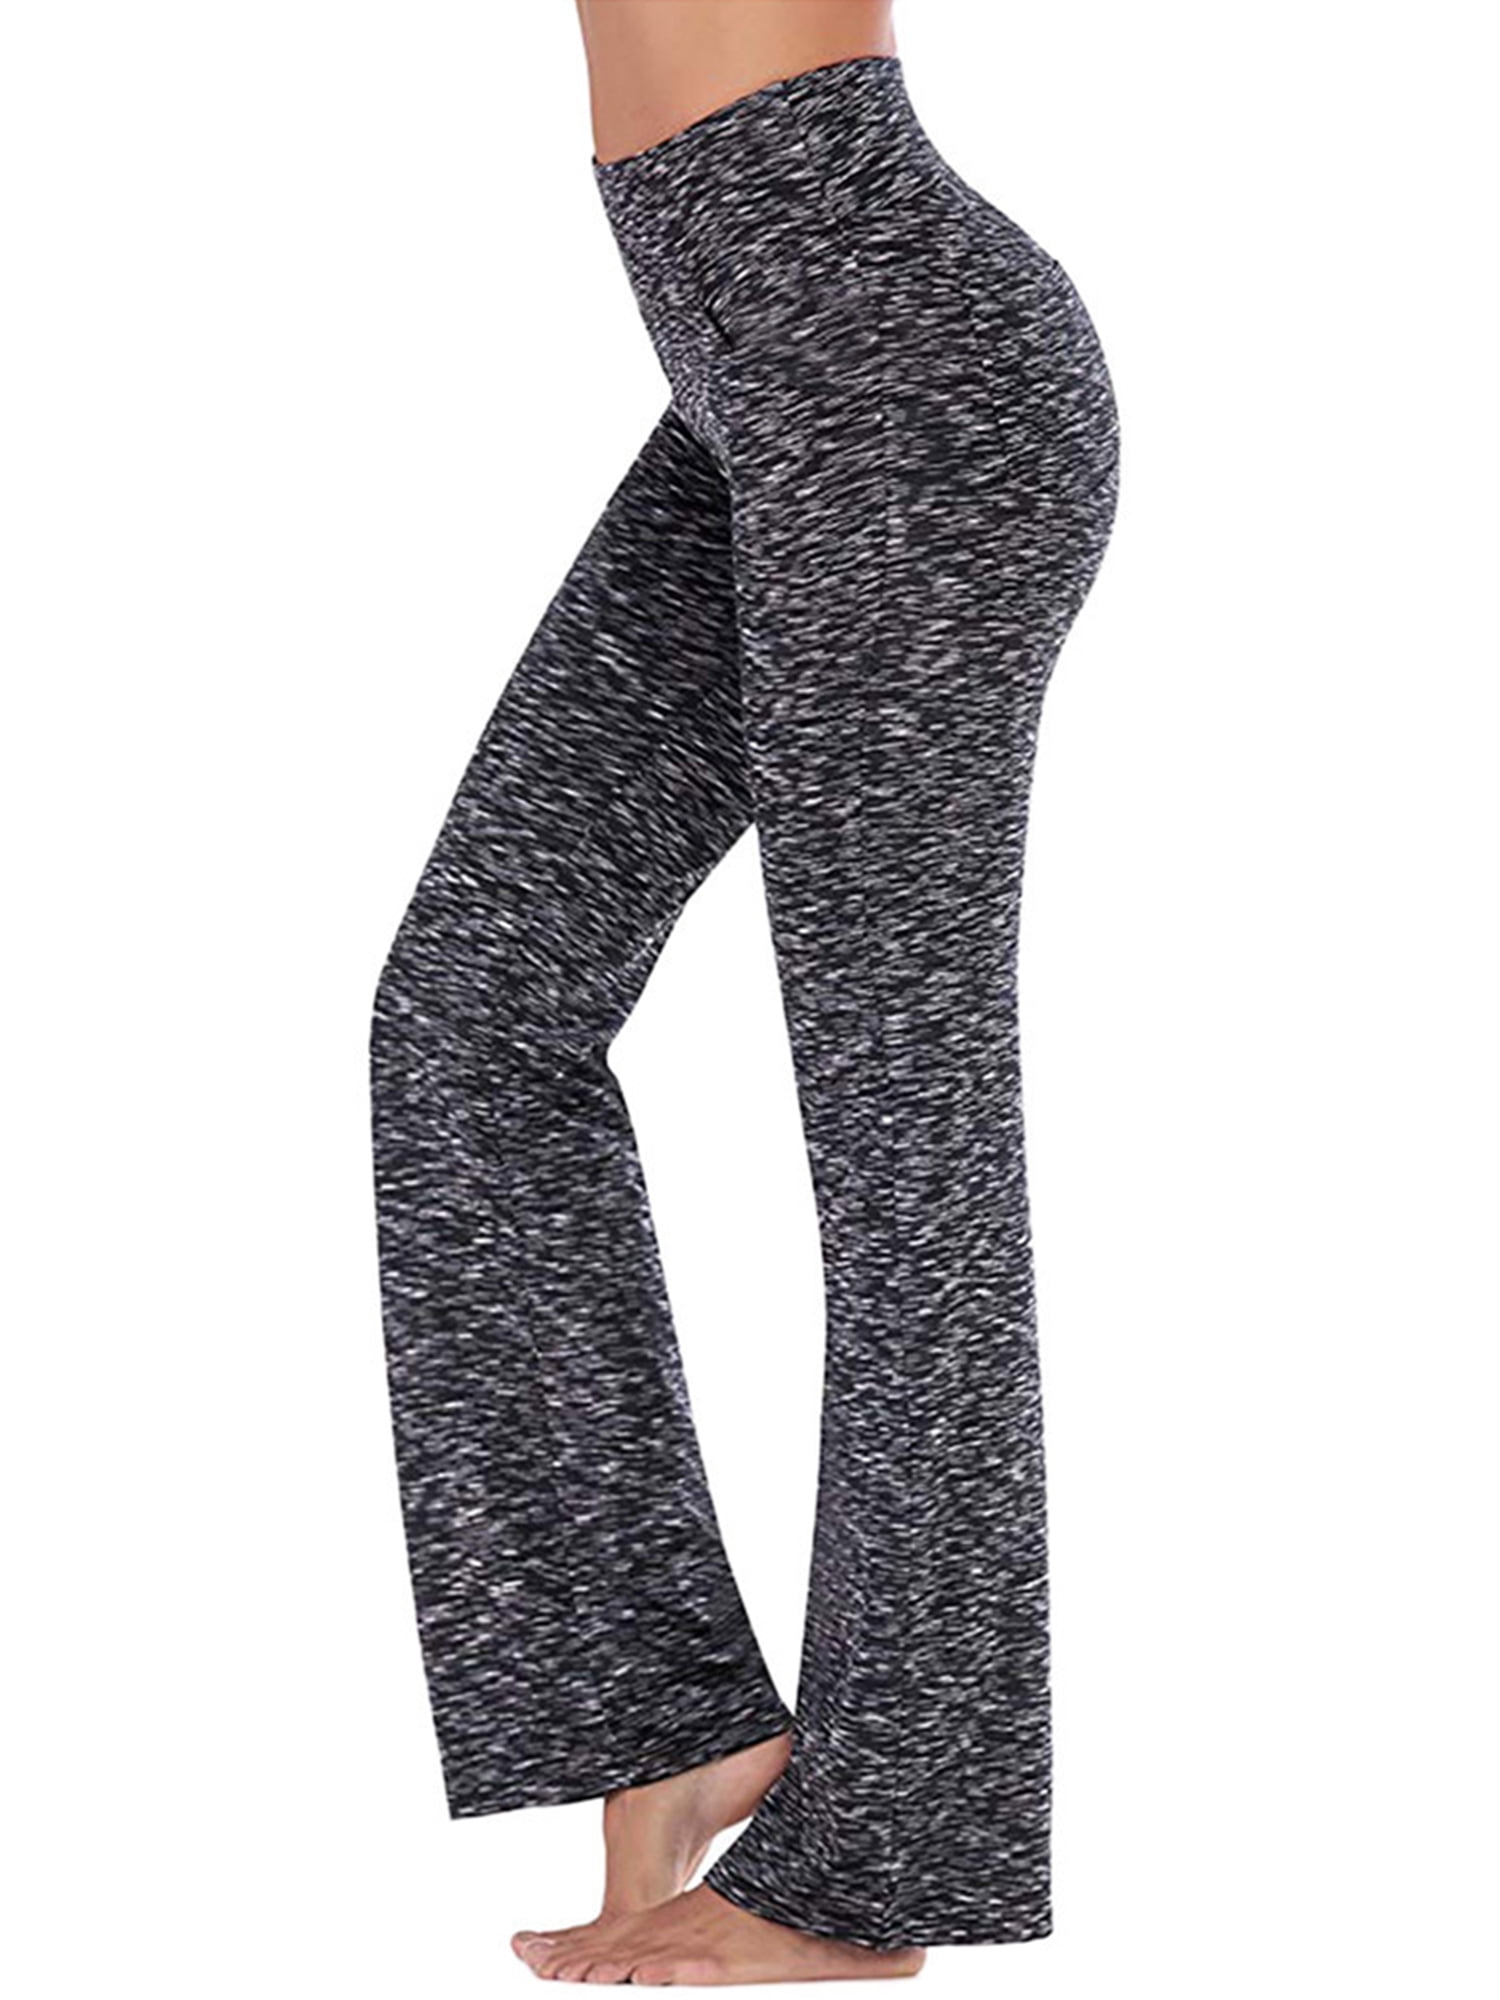 LEINIDINA Bootcut Yoga Pants for Women Flared Leggings with Pocket Bootleg  Casual Lounge Pants Work Pants Sweatpants